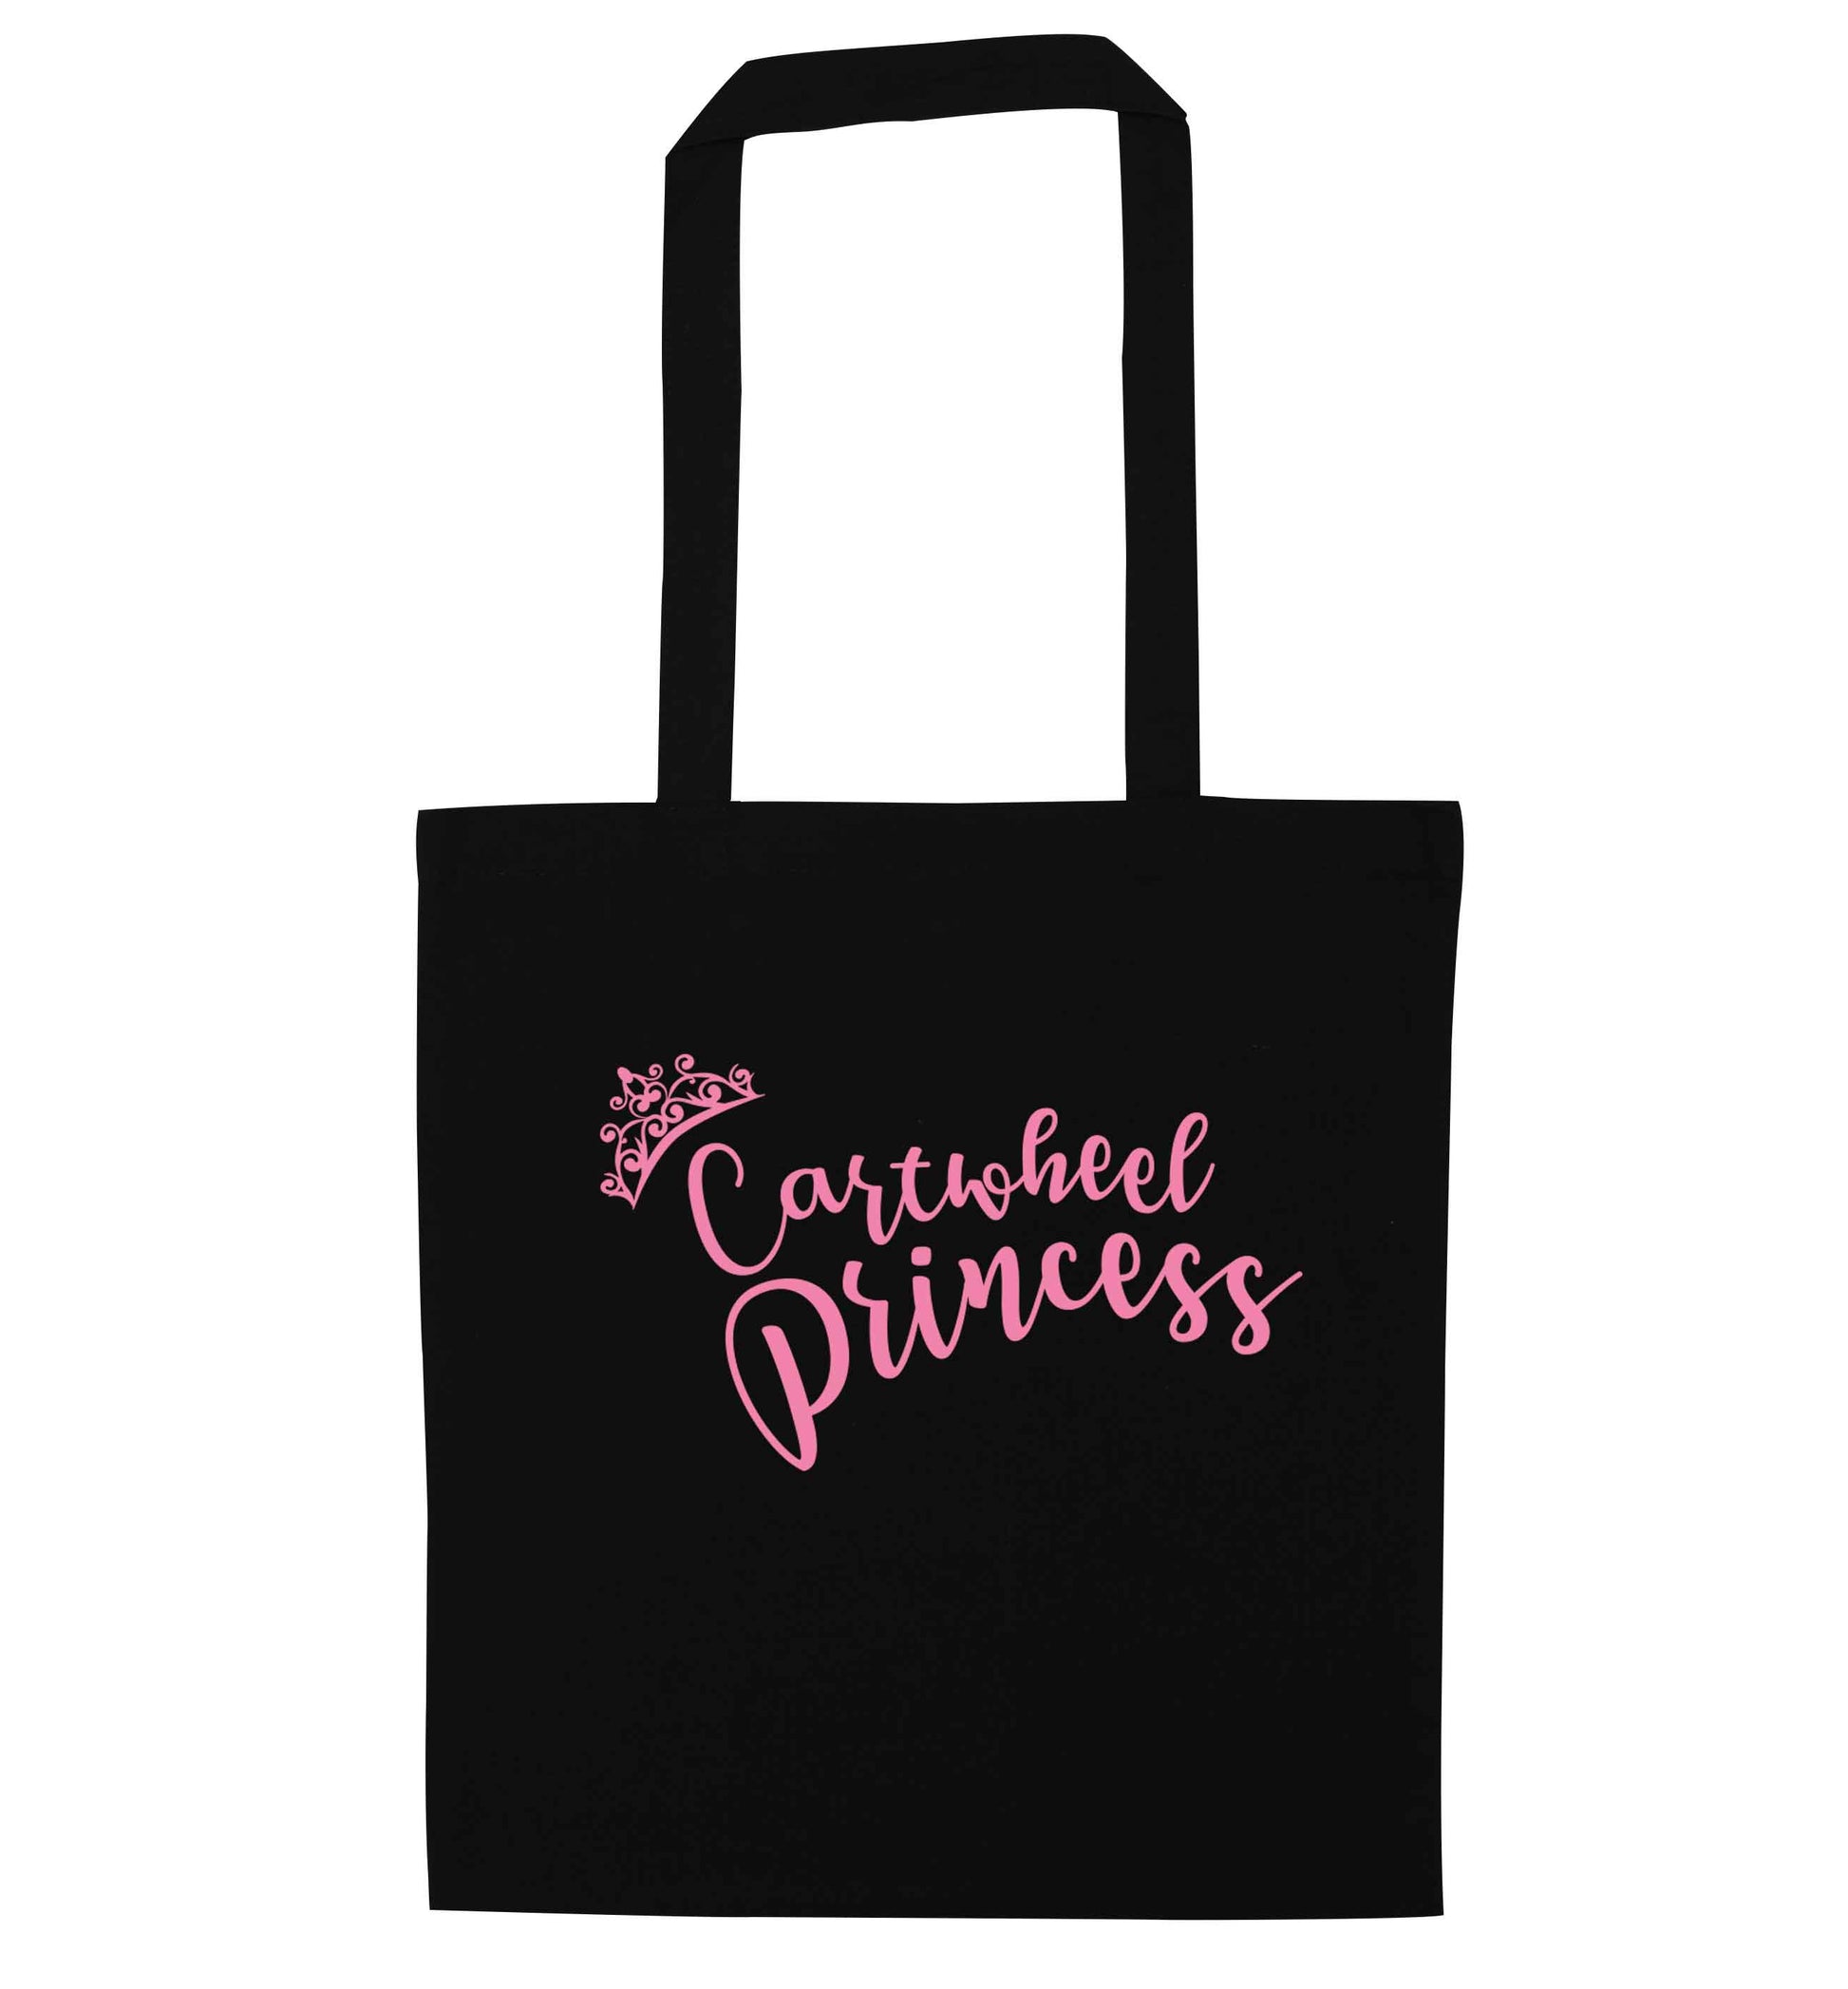 Cartwheel princess black tote bag